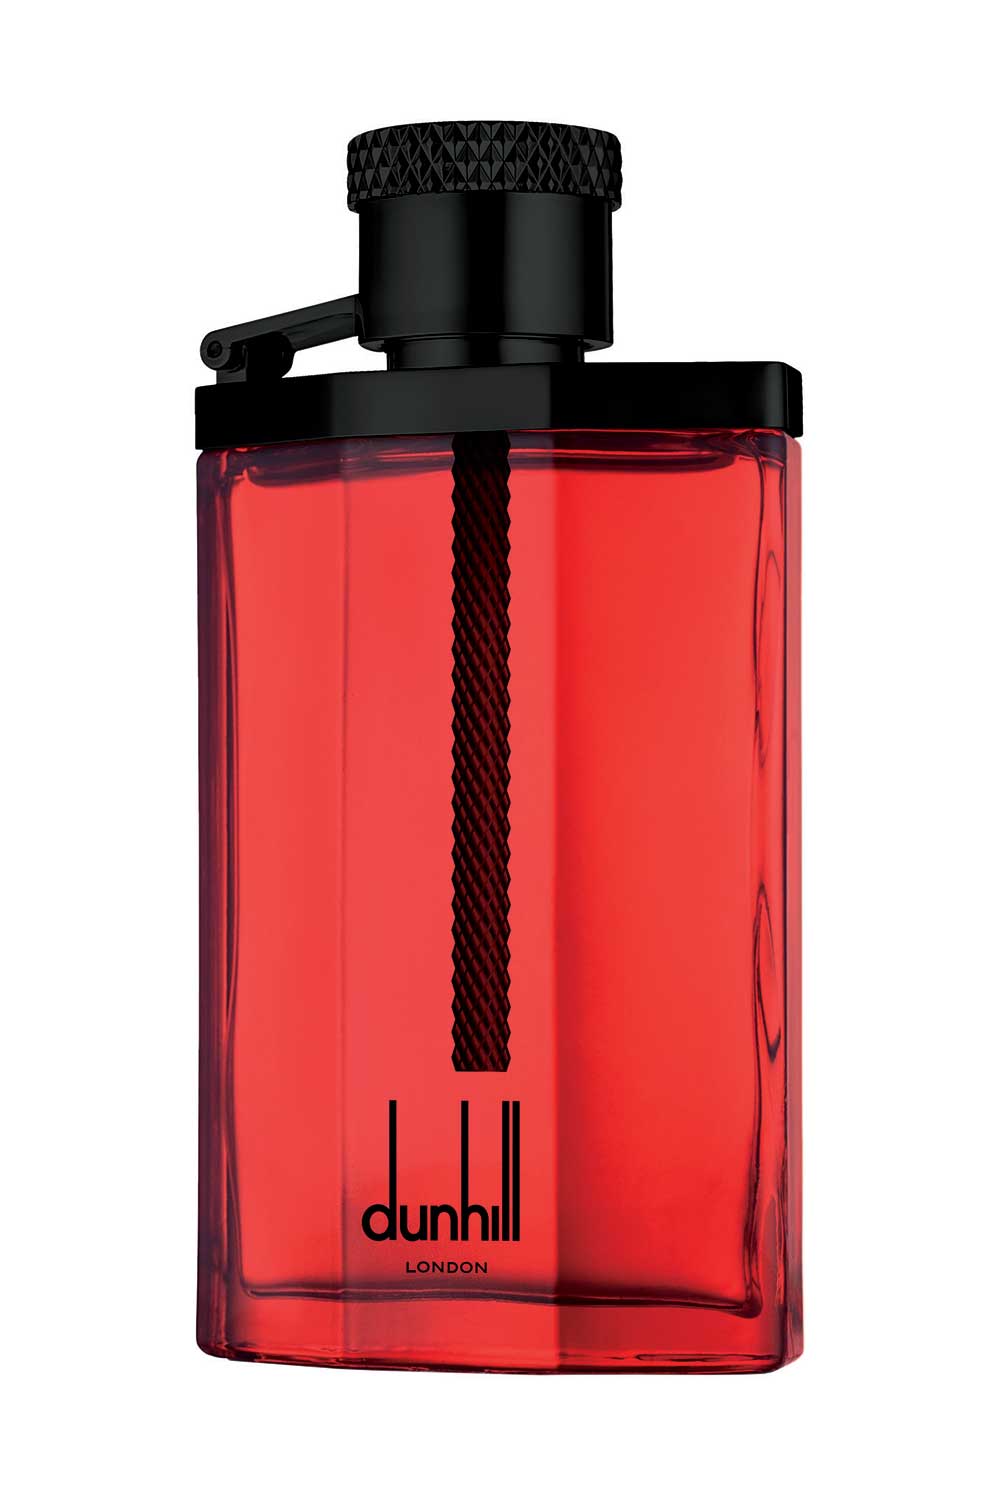 dunhill ladies perfume